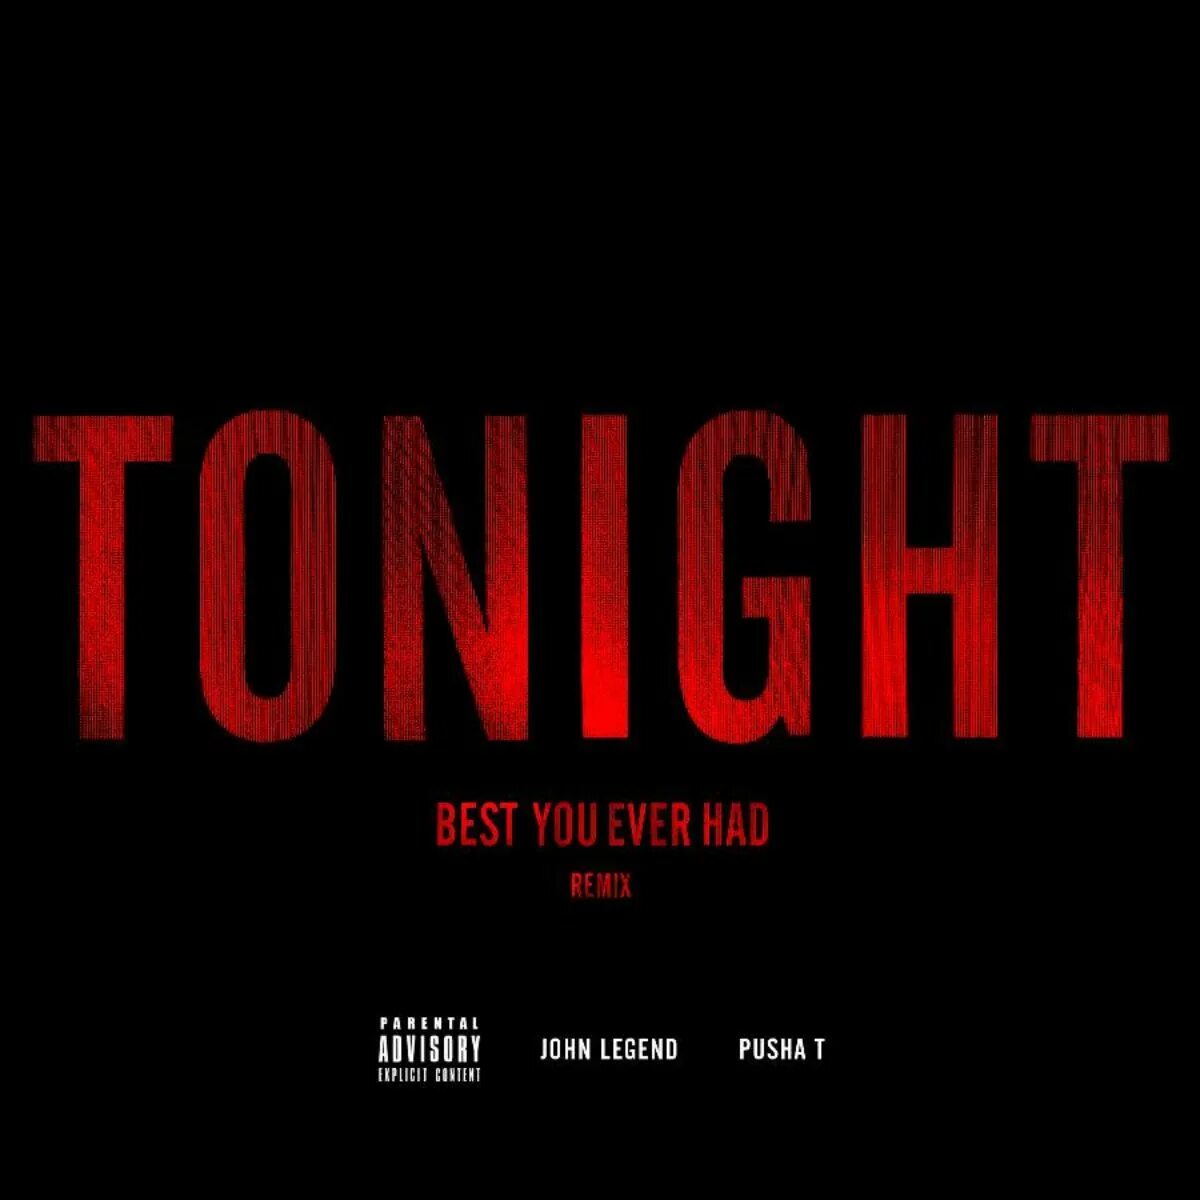 John Legend Tonight. Pusha t. John Legend Tonight перевод. John Legend ft. Pusha t Tonight (best you ever heard) (Remix). Feat pusha